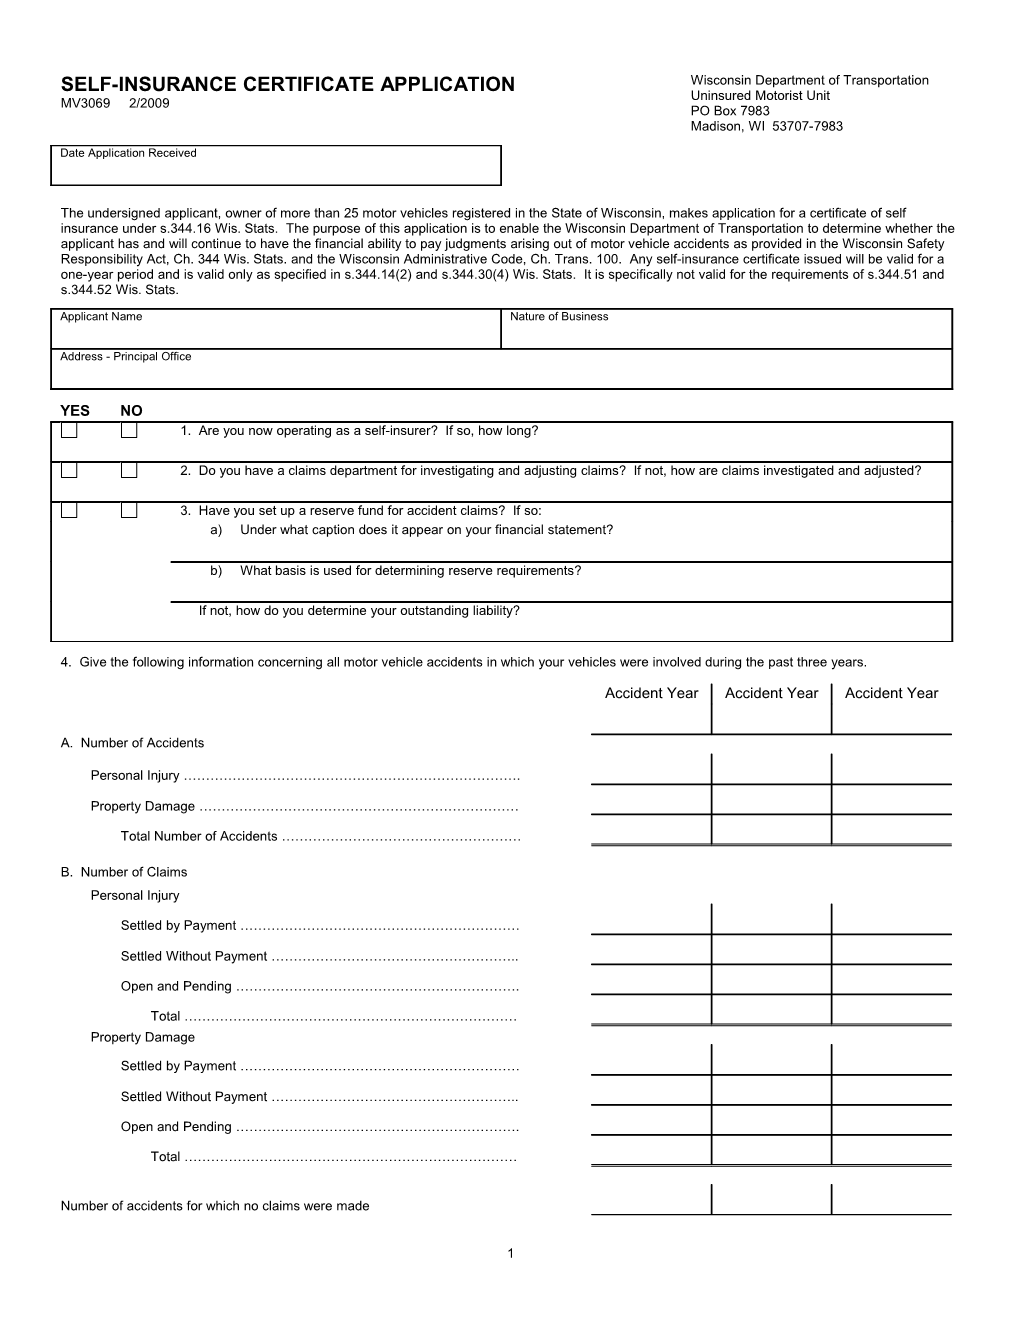 MV3069 Self-Insurance Certificate Application